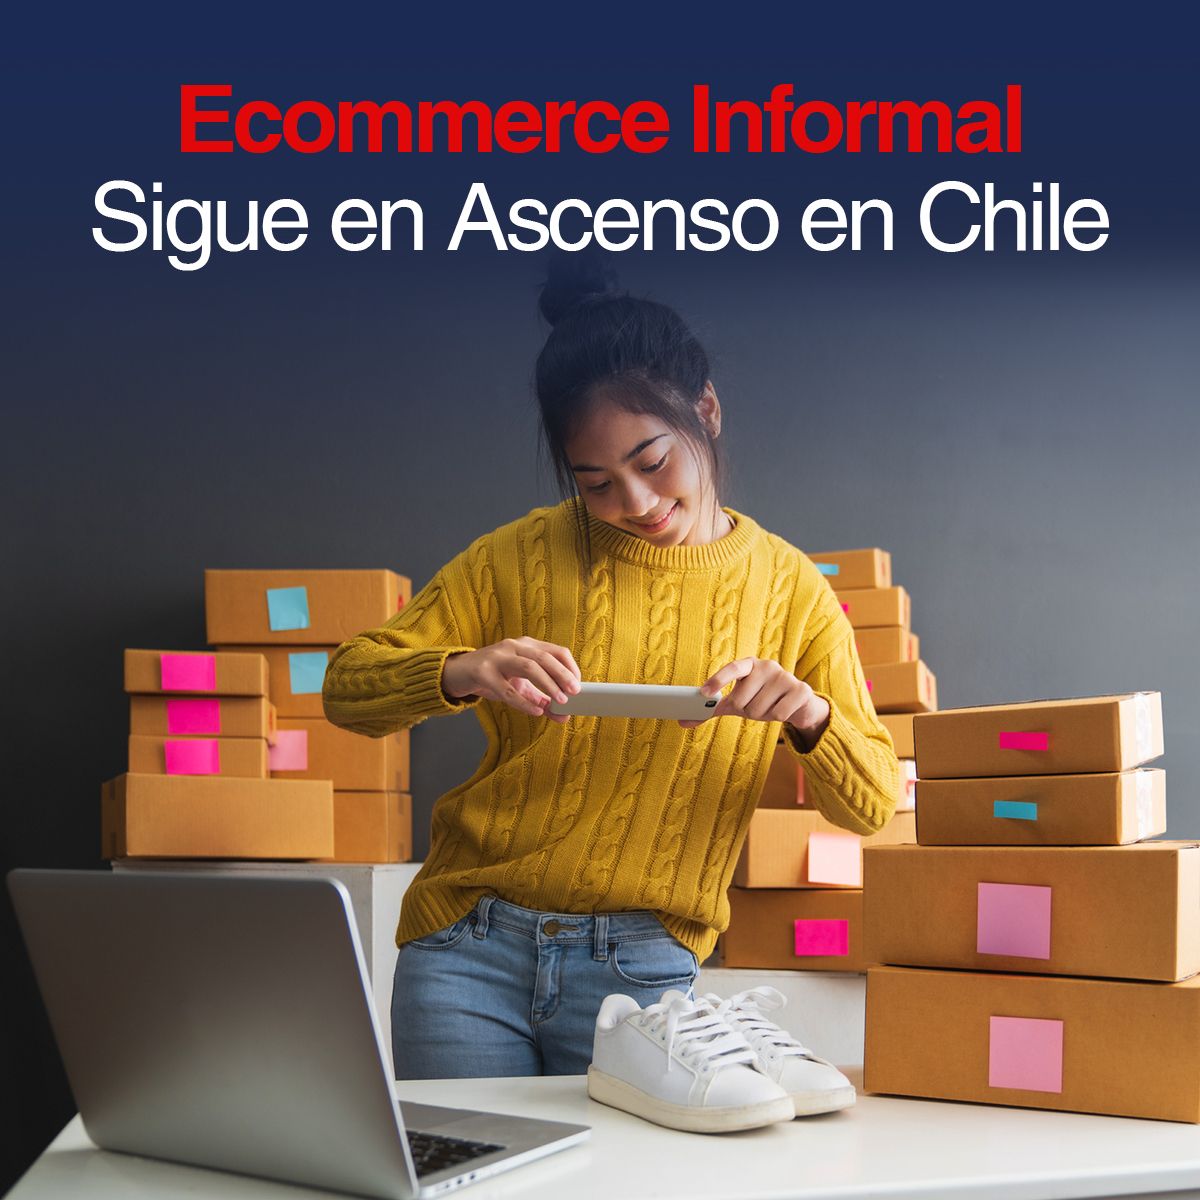 Ecommerce Informal Sigue en Ascenso en Chile